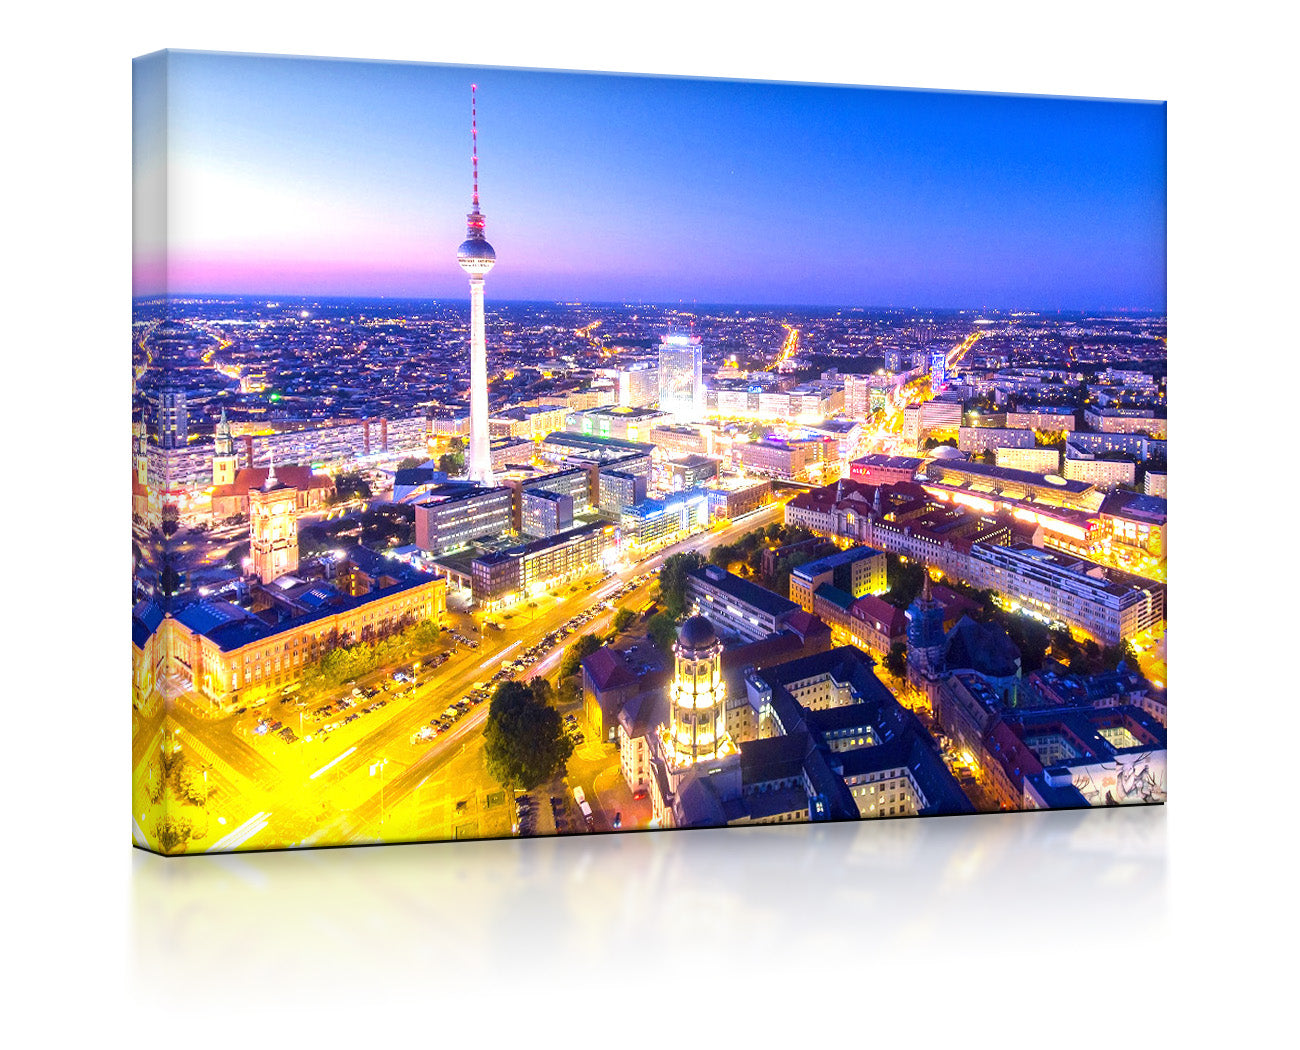 Berlin City als leuchtbild